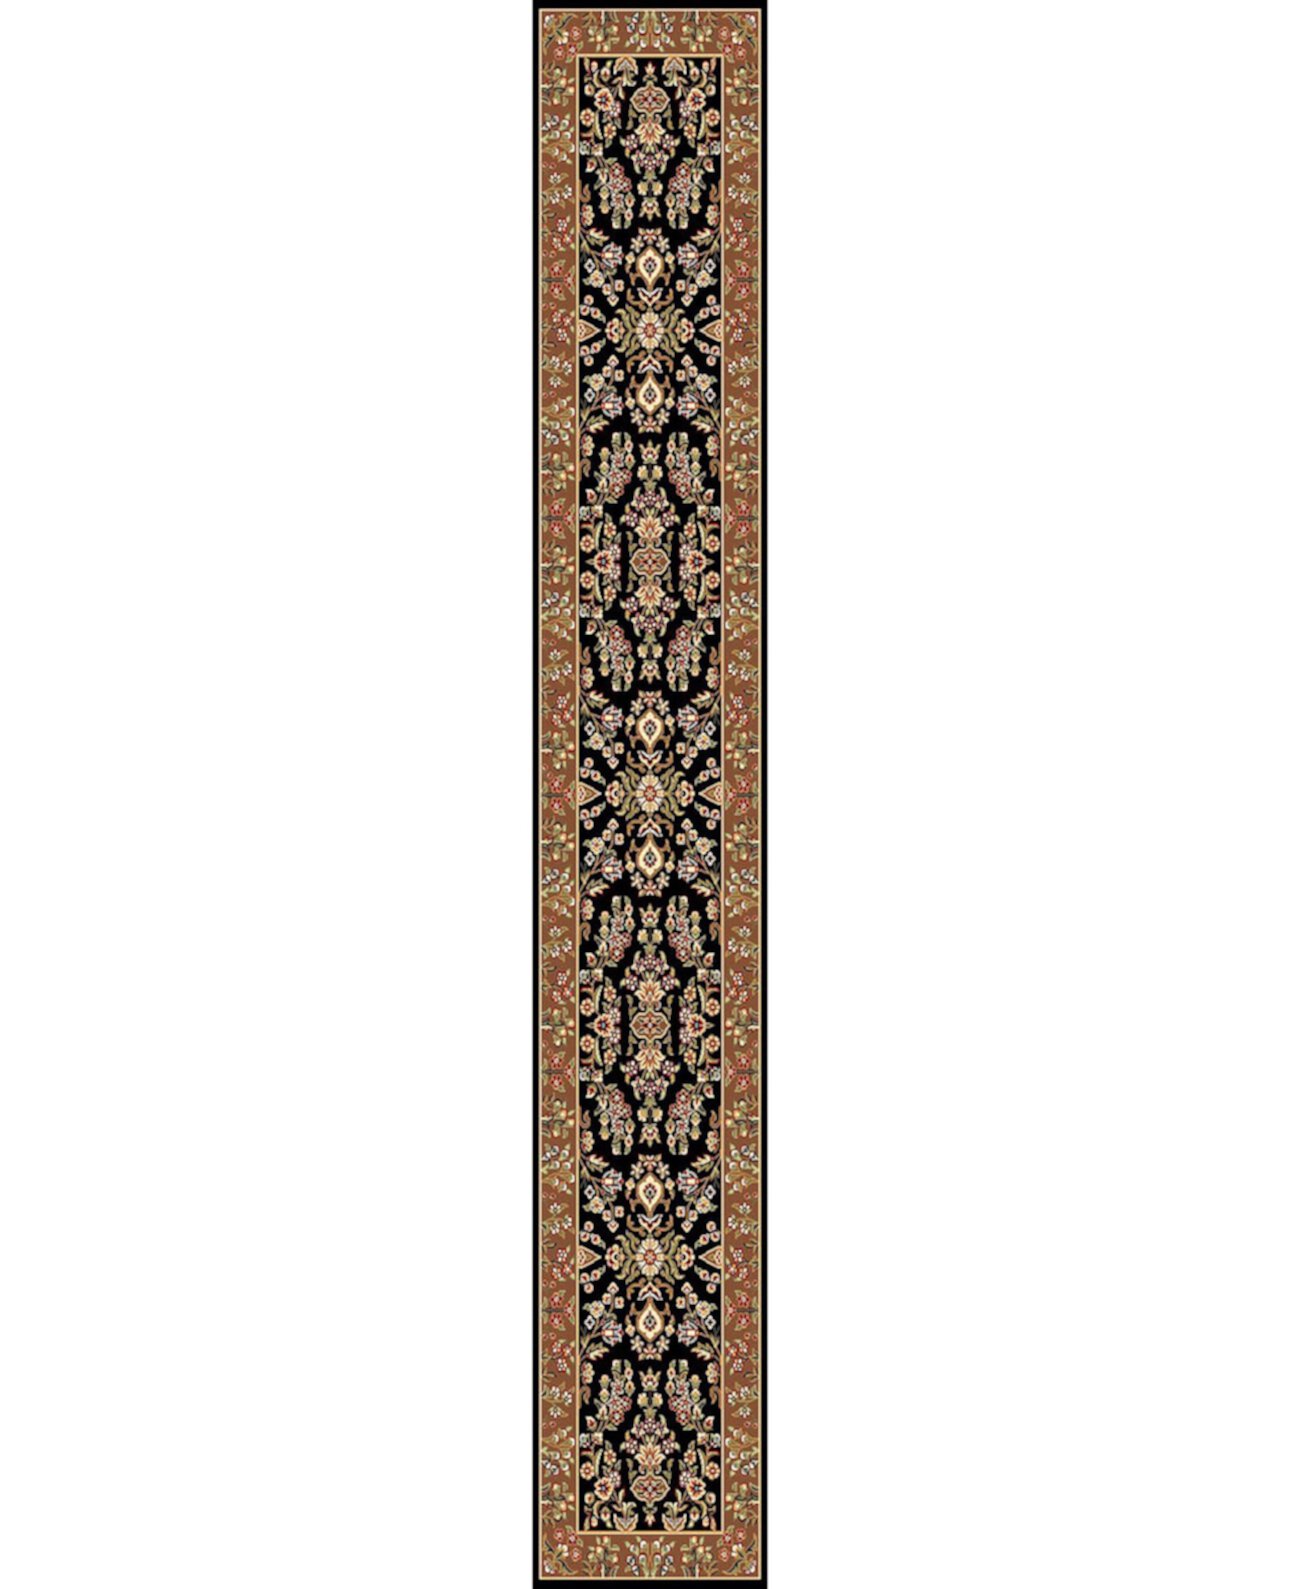 Lyndhurst LNH331 Черно-коричневый коврик для беговой дорожки размером 2 фута 3 x 12 футов Safavieh